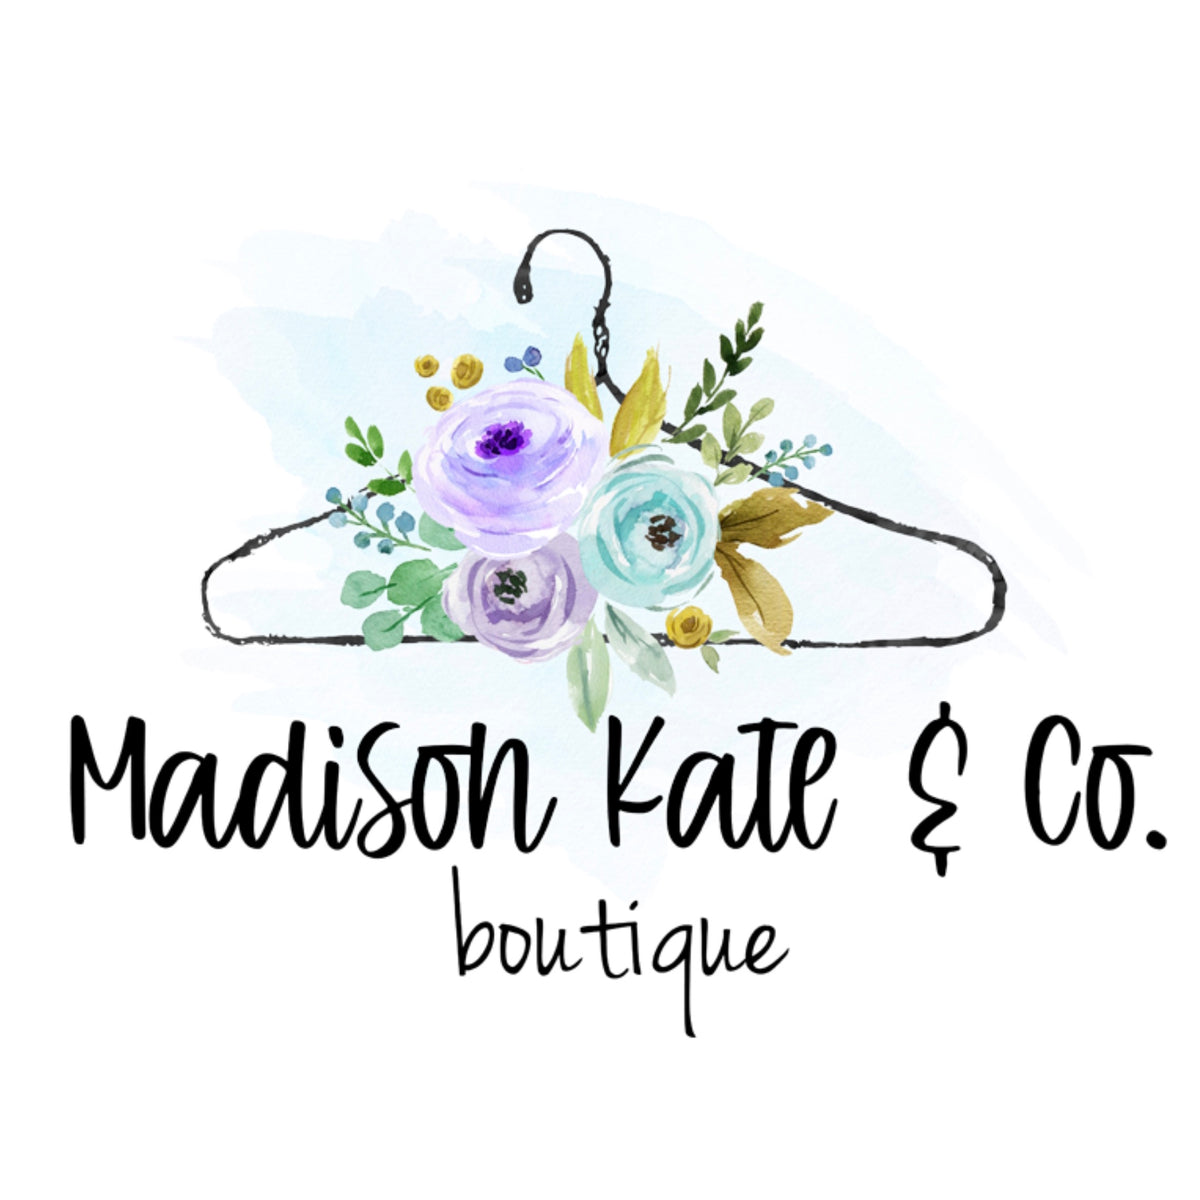 Madison Kate & Co.